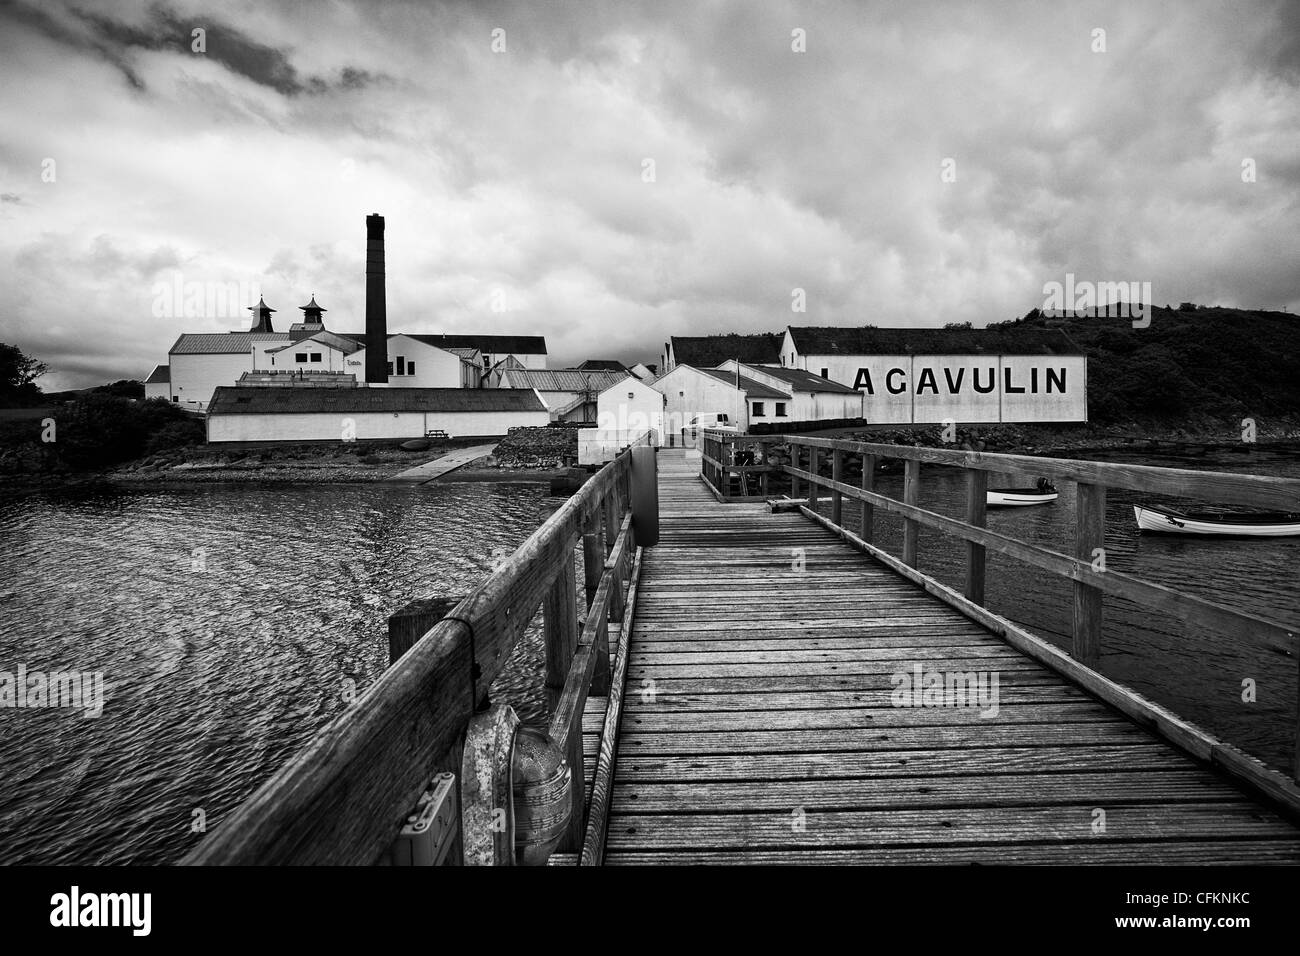 Lagavulin Distillery Islay Scotland Stock Photo